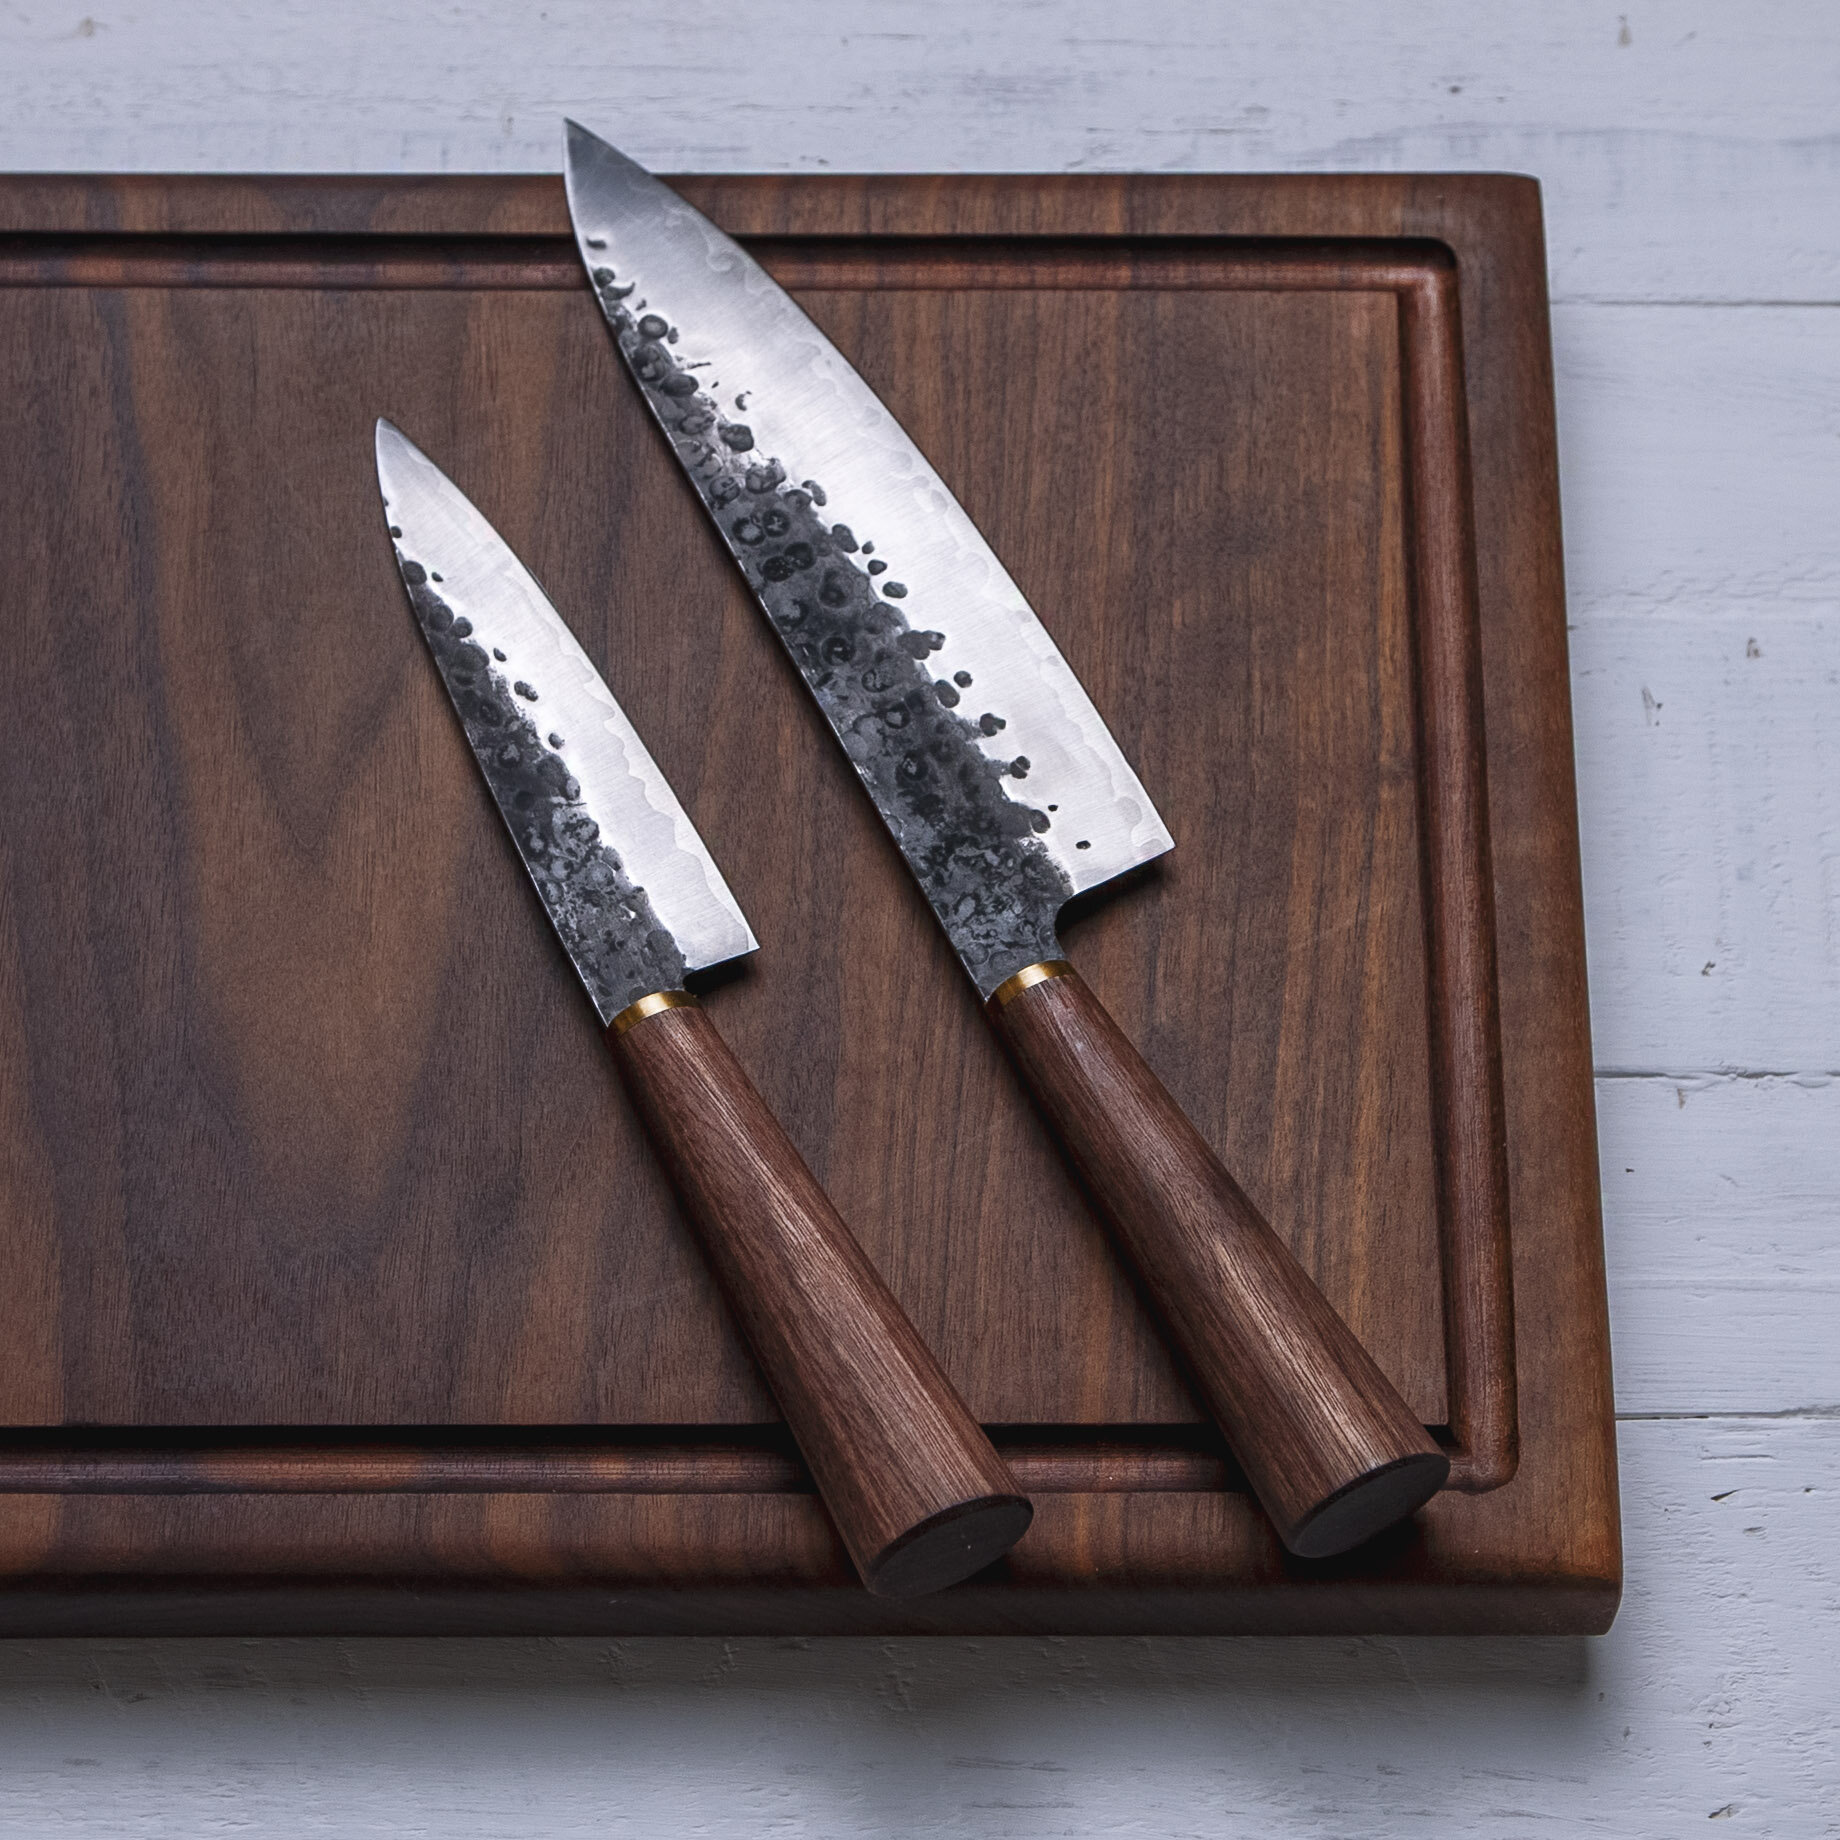 katto-knives-henry-chopping-board-1.jpg